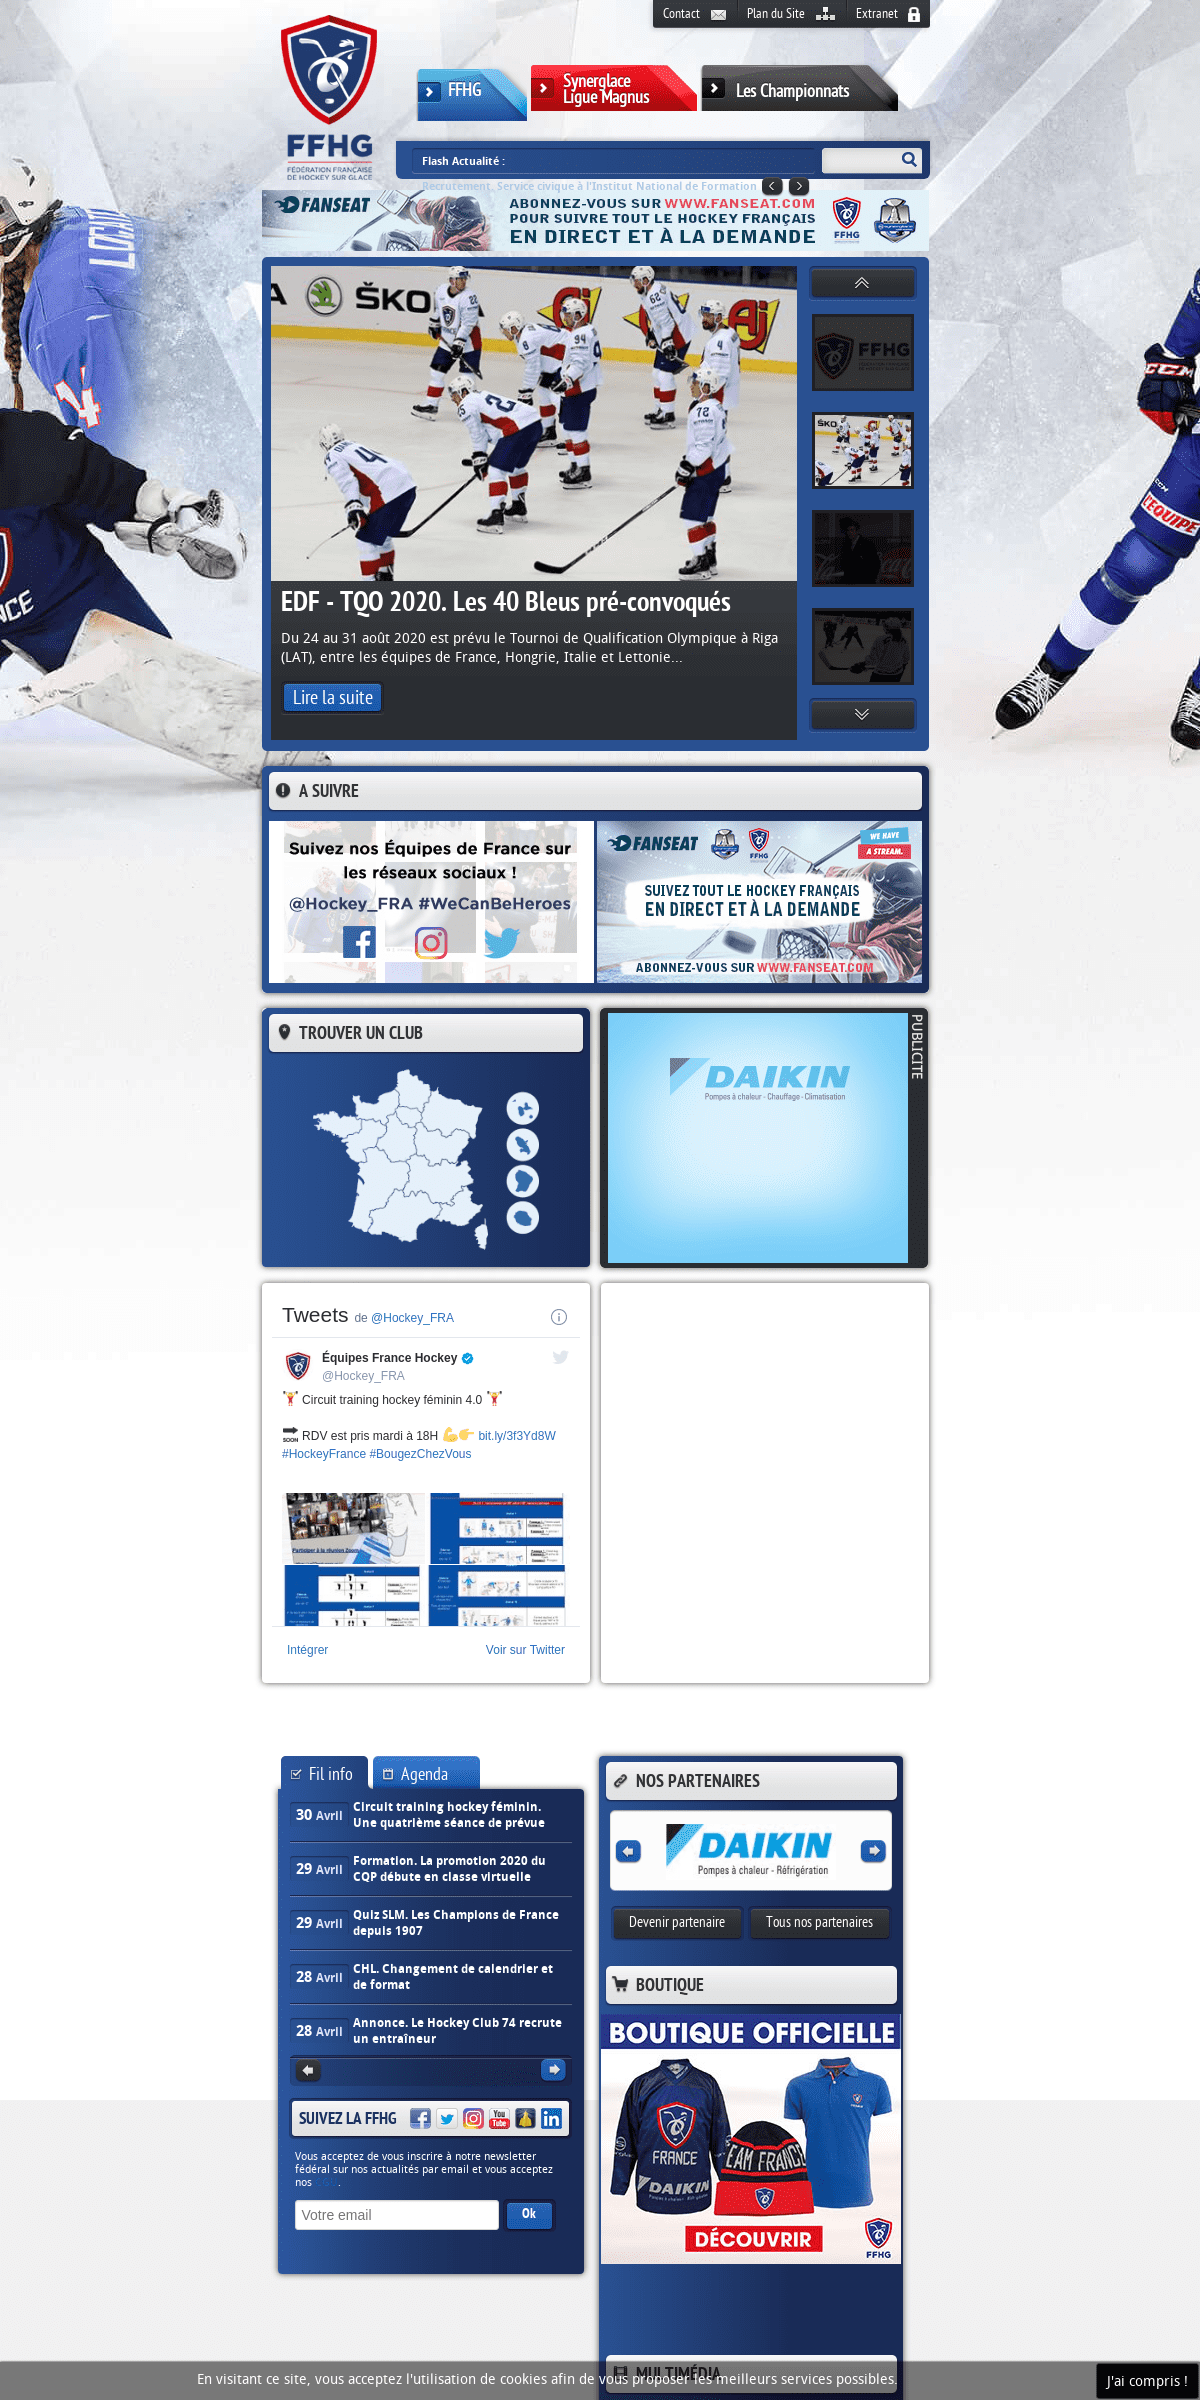 A complete backup of hockeyfrance.com